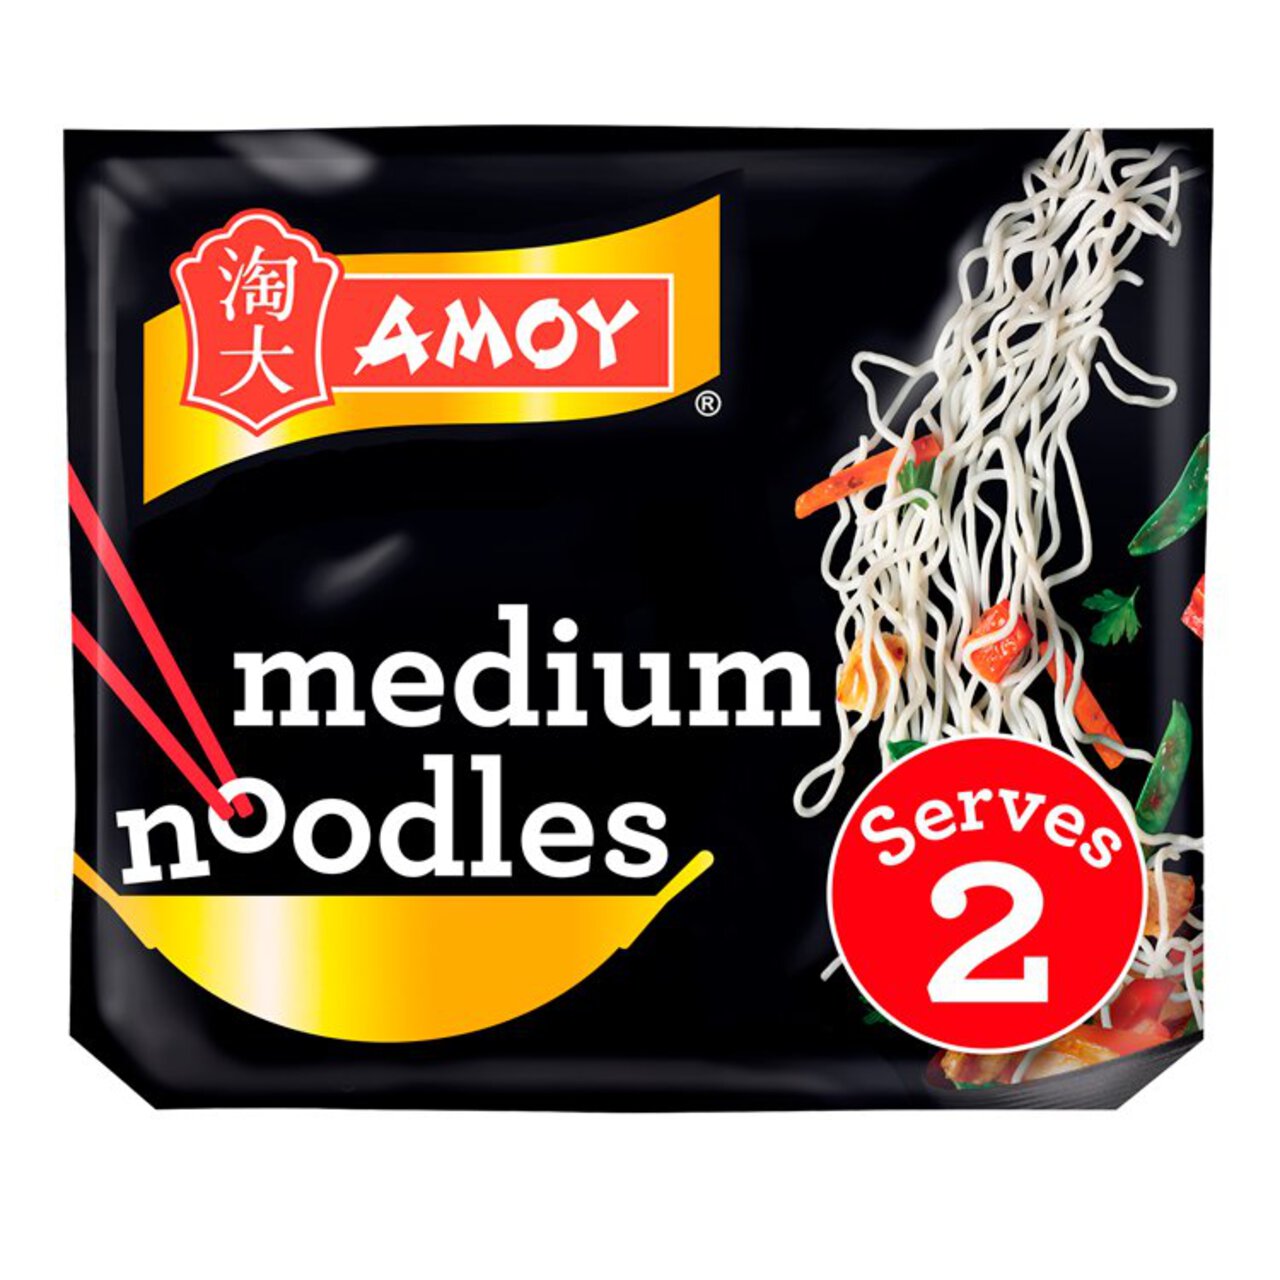 Amoy Straight To Wok Medium Noodles 2 x 150g